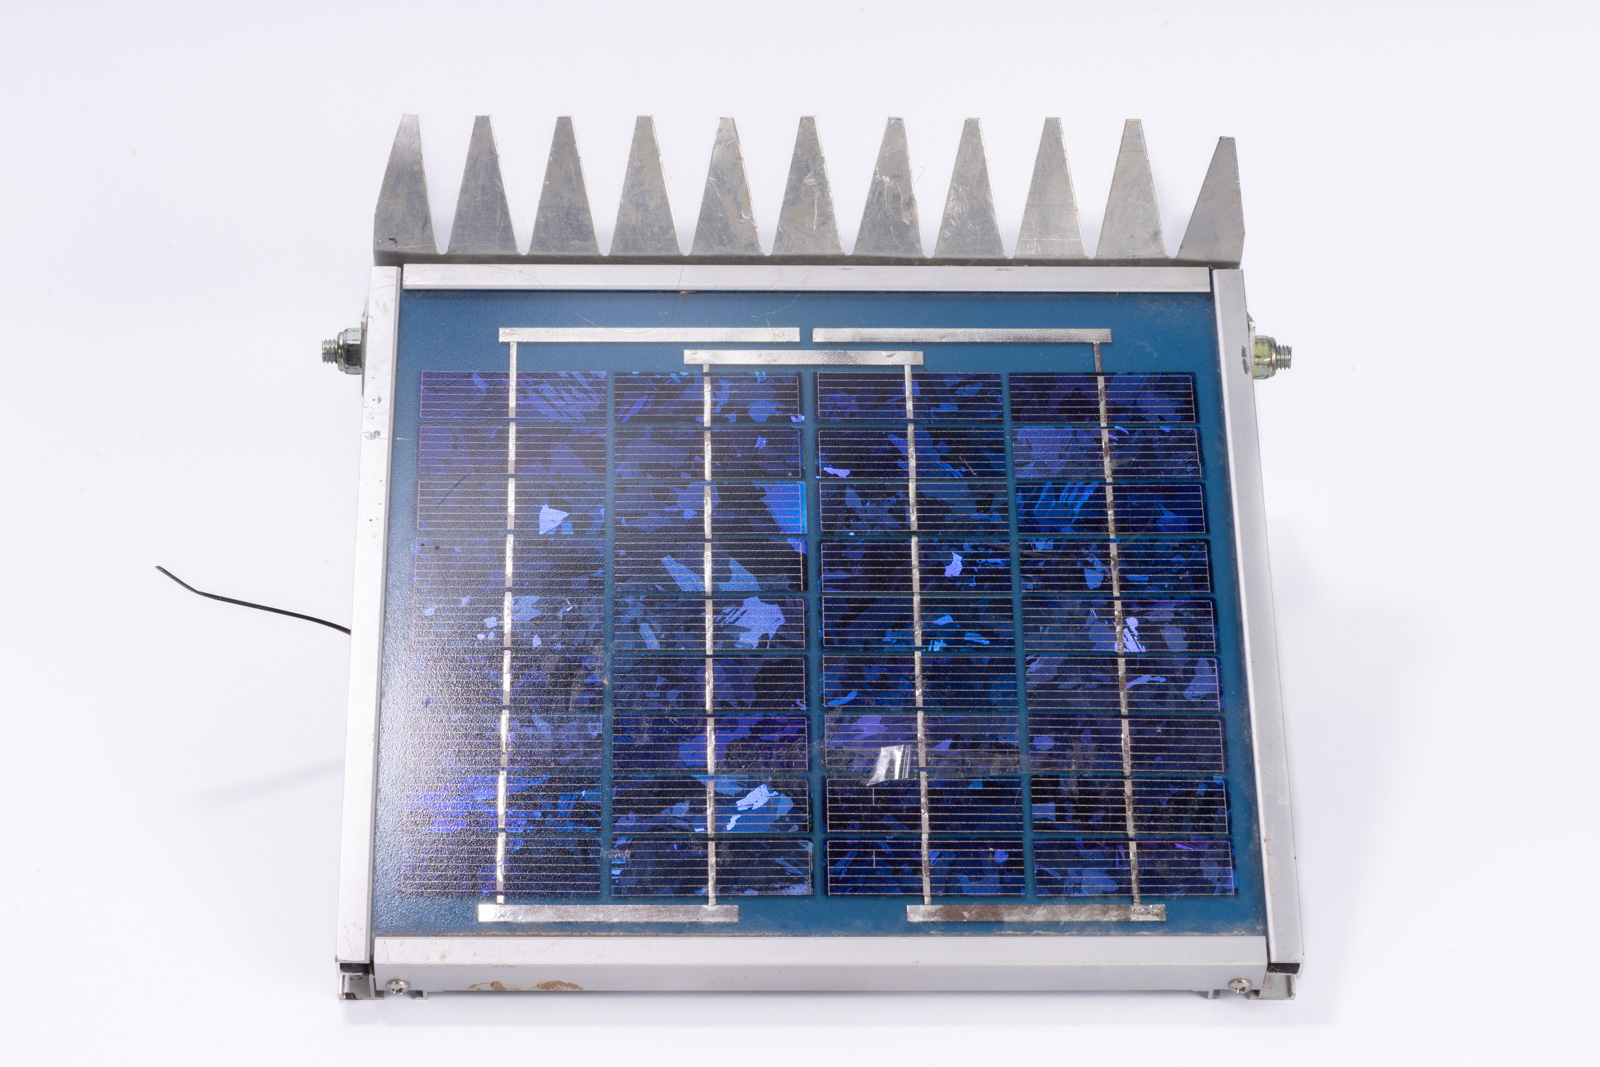 BP Solar Panel